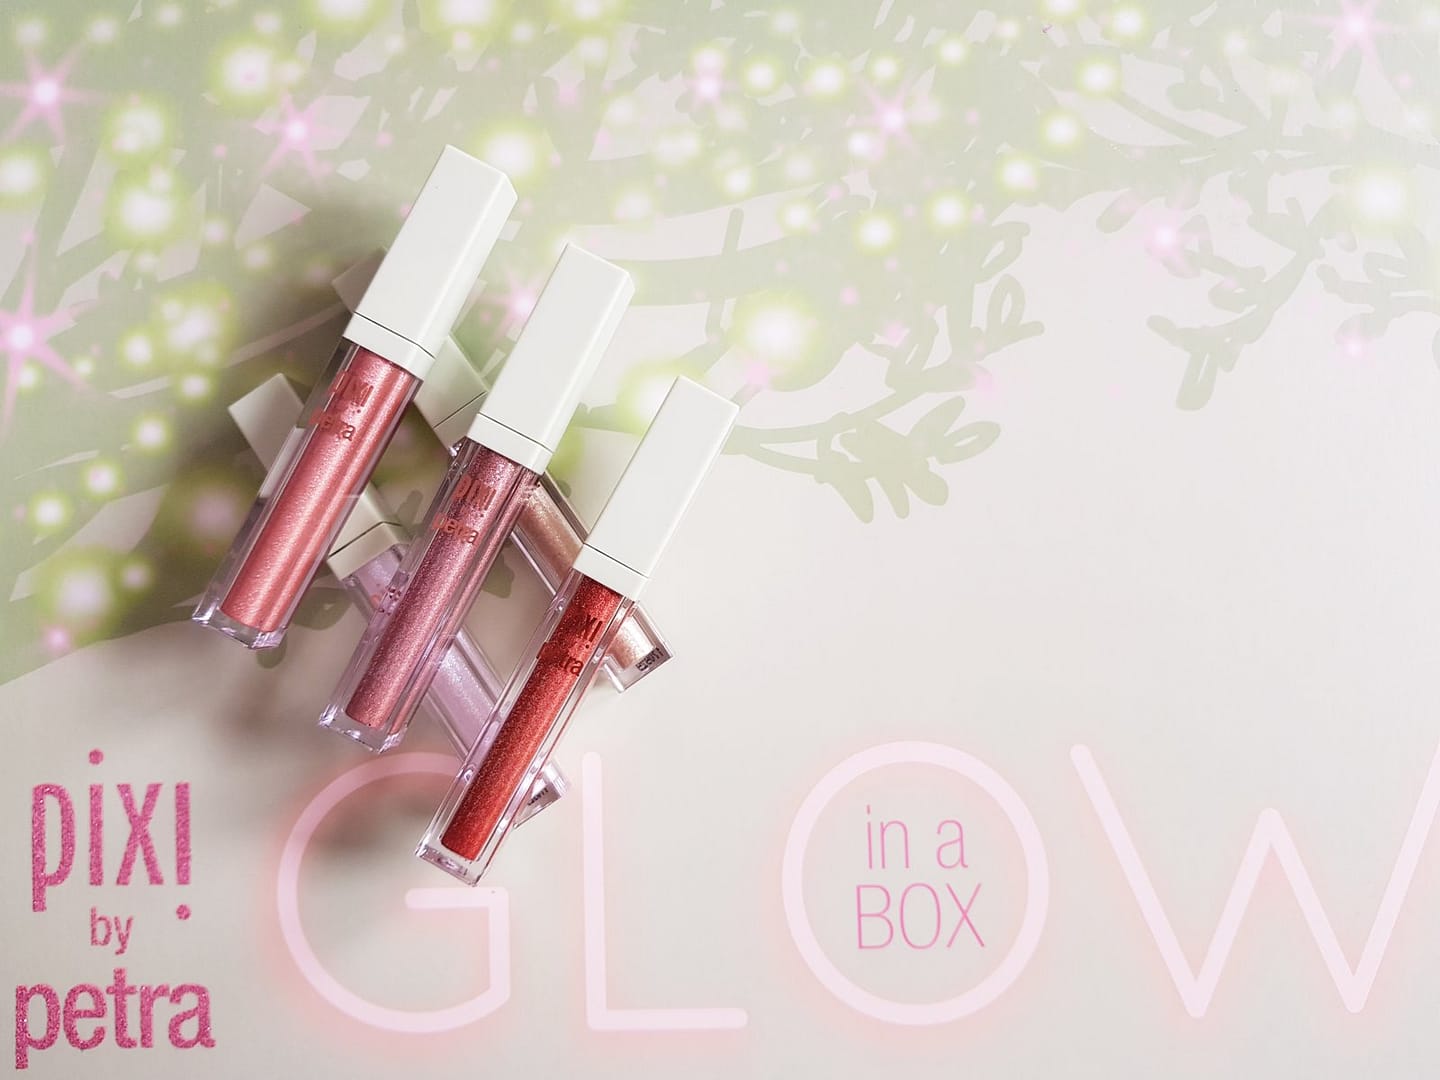 Pixi Beauty Glow in a Box - Glow-y Gossamer Duo highlighters + Liquid Fairy Lights eyeshadows - Ms Tantrum Blog